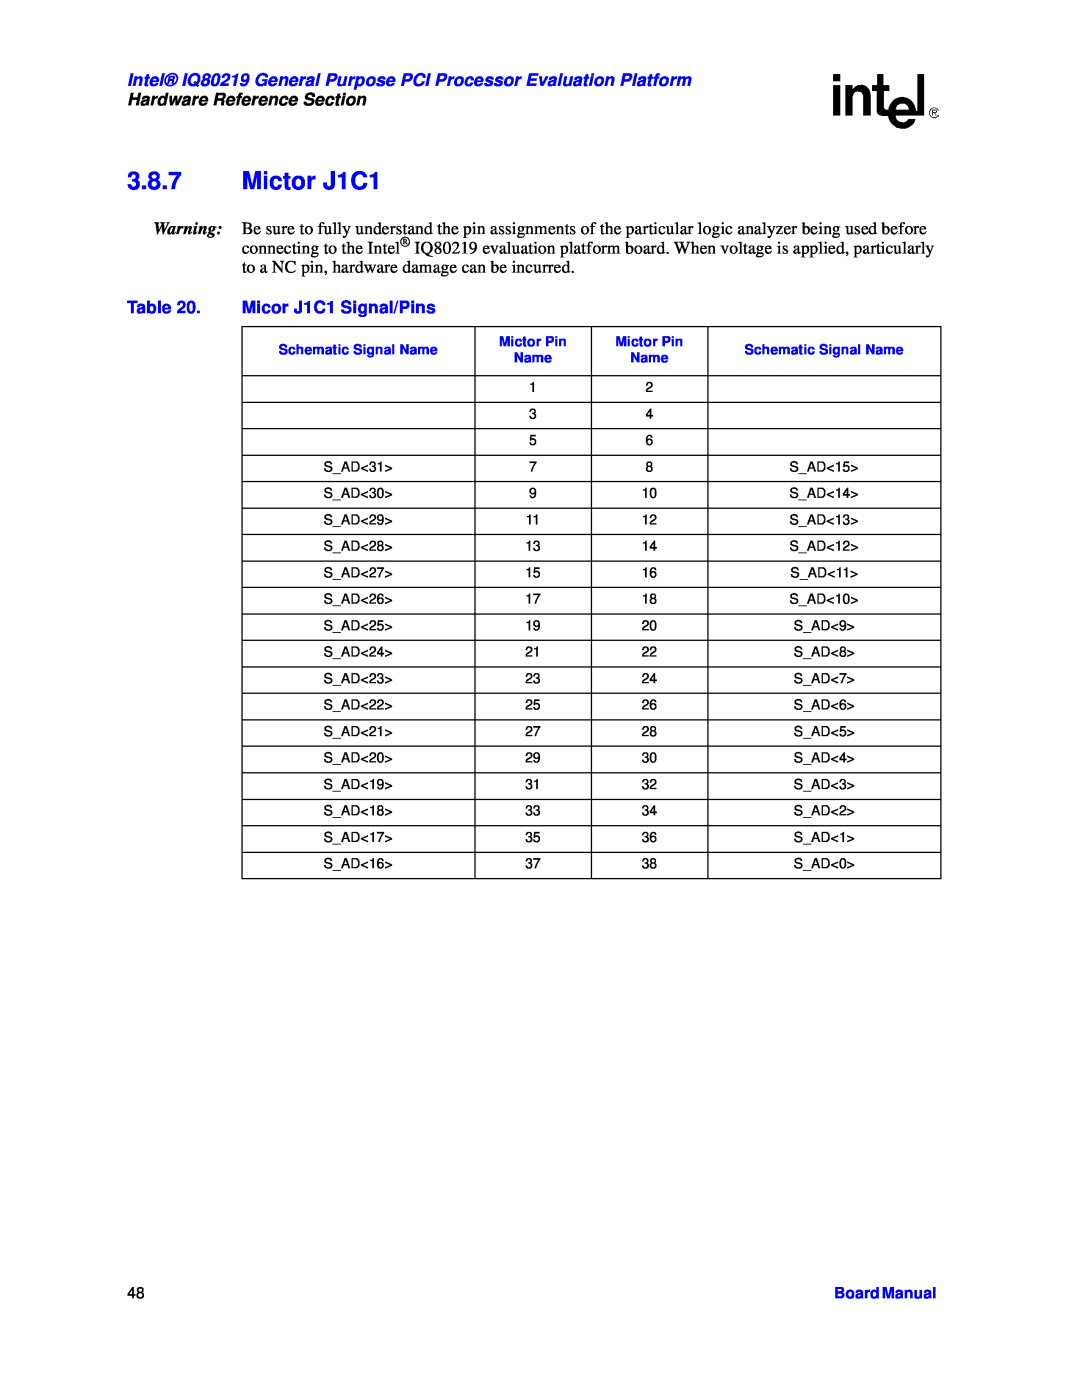 Intel manual Mictor J1C1, Micor J1C1 Signal/Pins, Intel IQ80219 General Purpose PCI Processor Evaluation Platform 